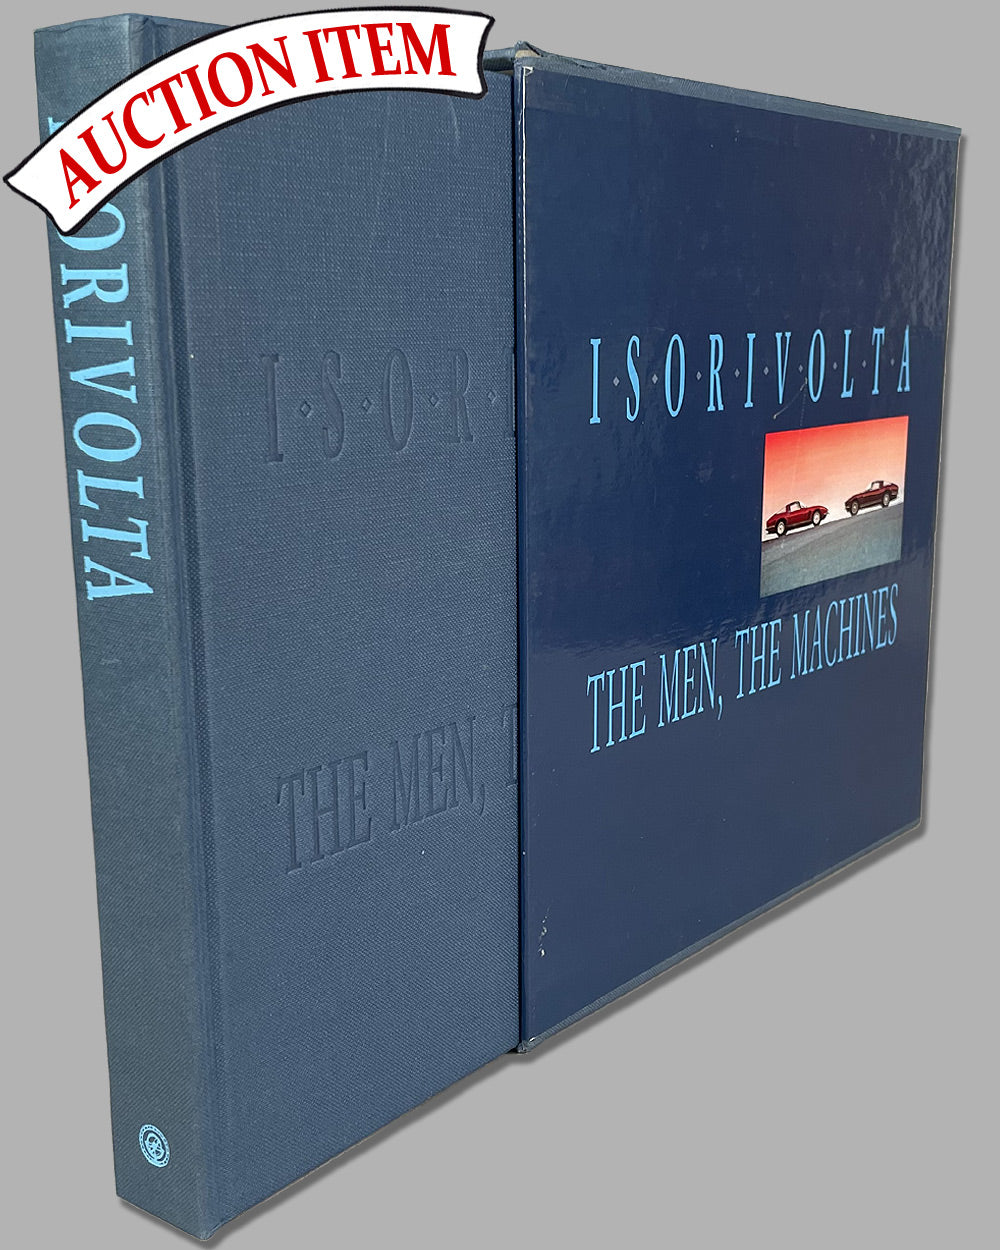 Iso Rivolta, The Men, The Machines book by Winston Goodfellow, 1995